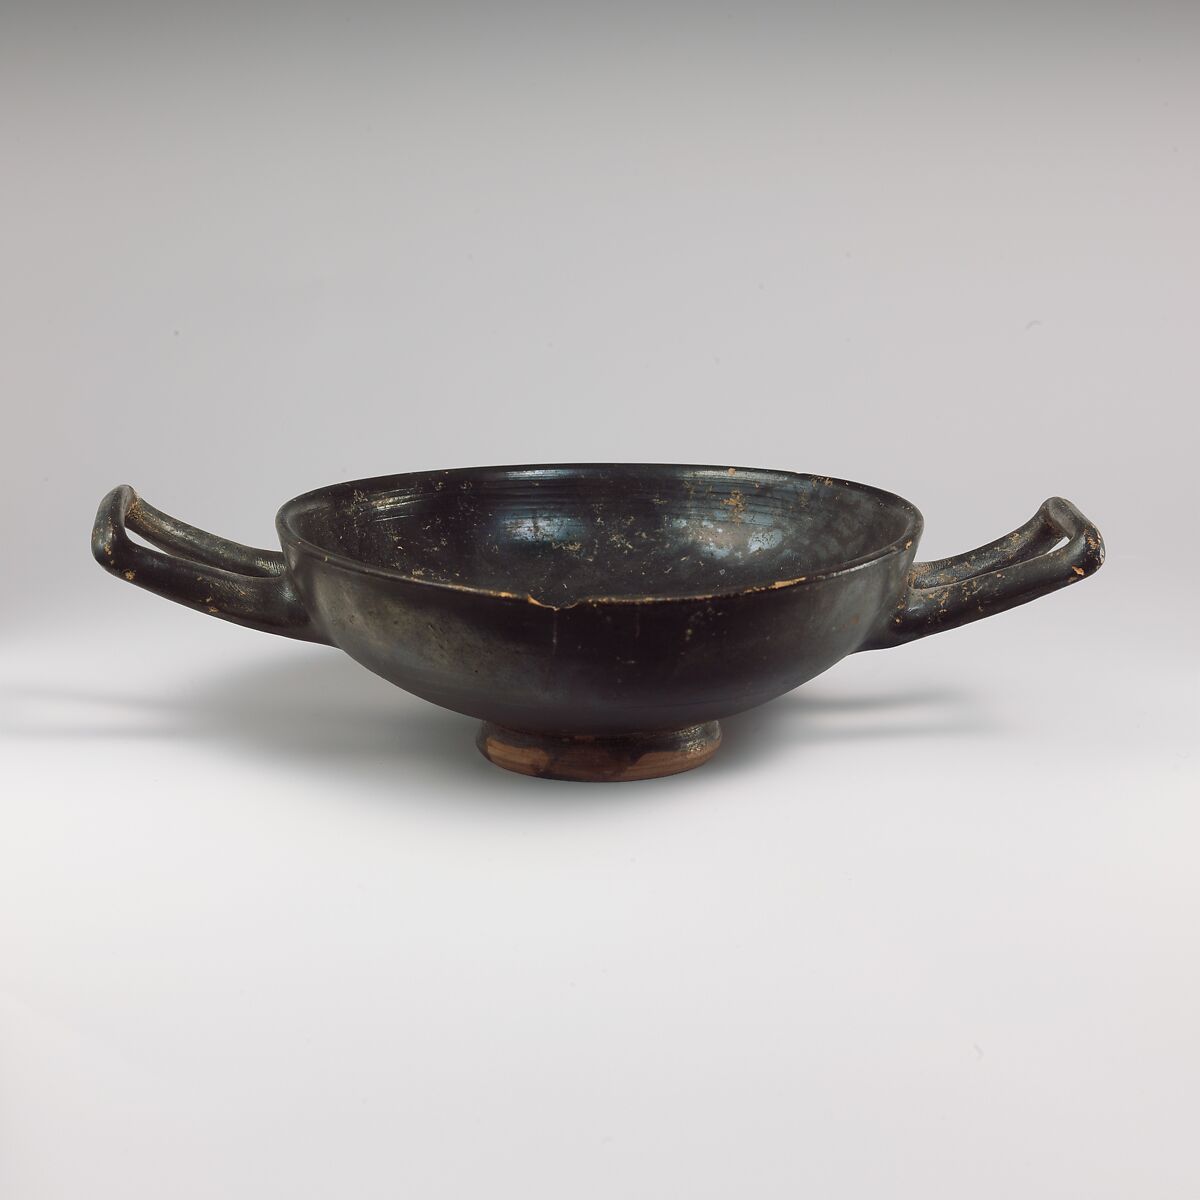 Terracotta stemless kylix (drinking cup), Terracotta, Greek, South Italian, Campanian 